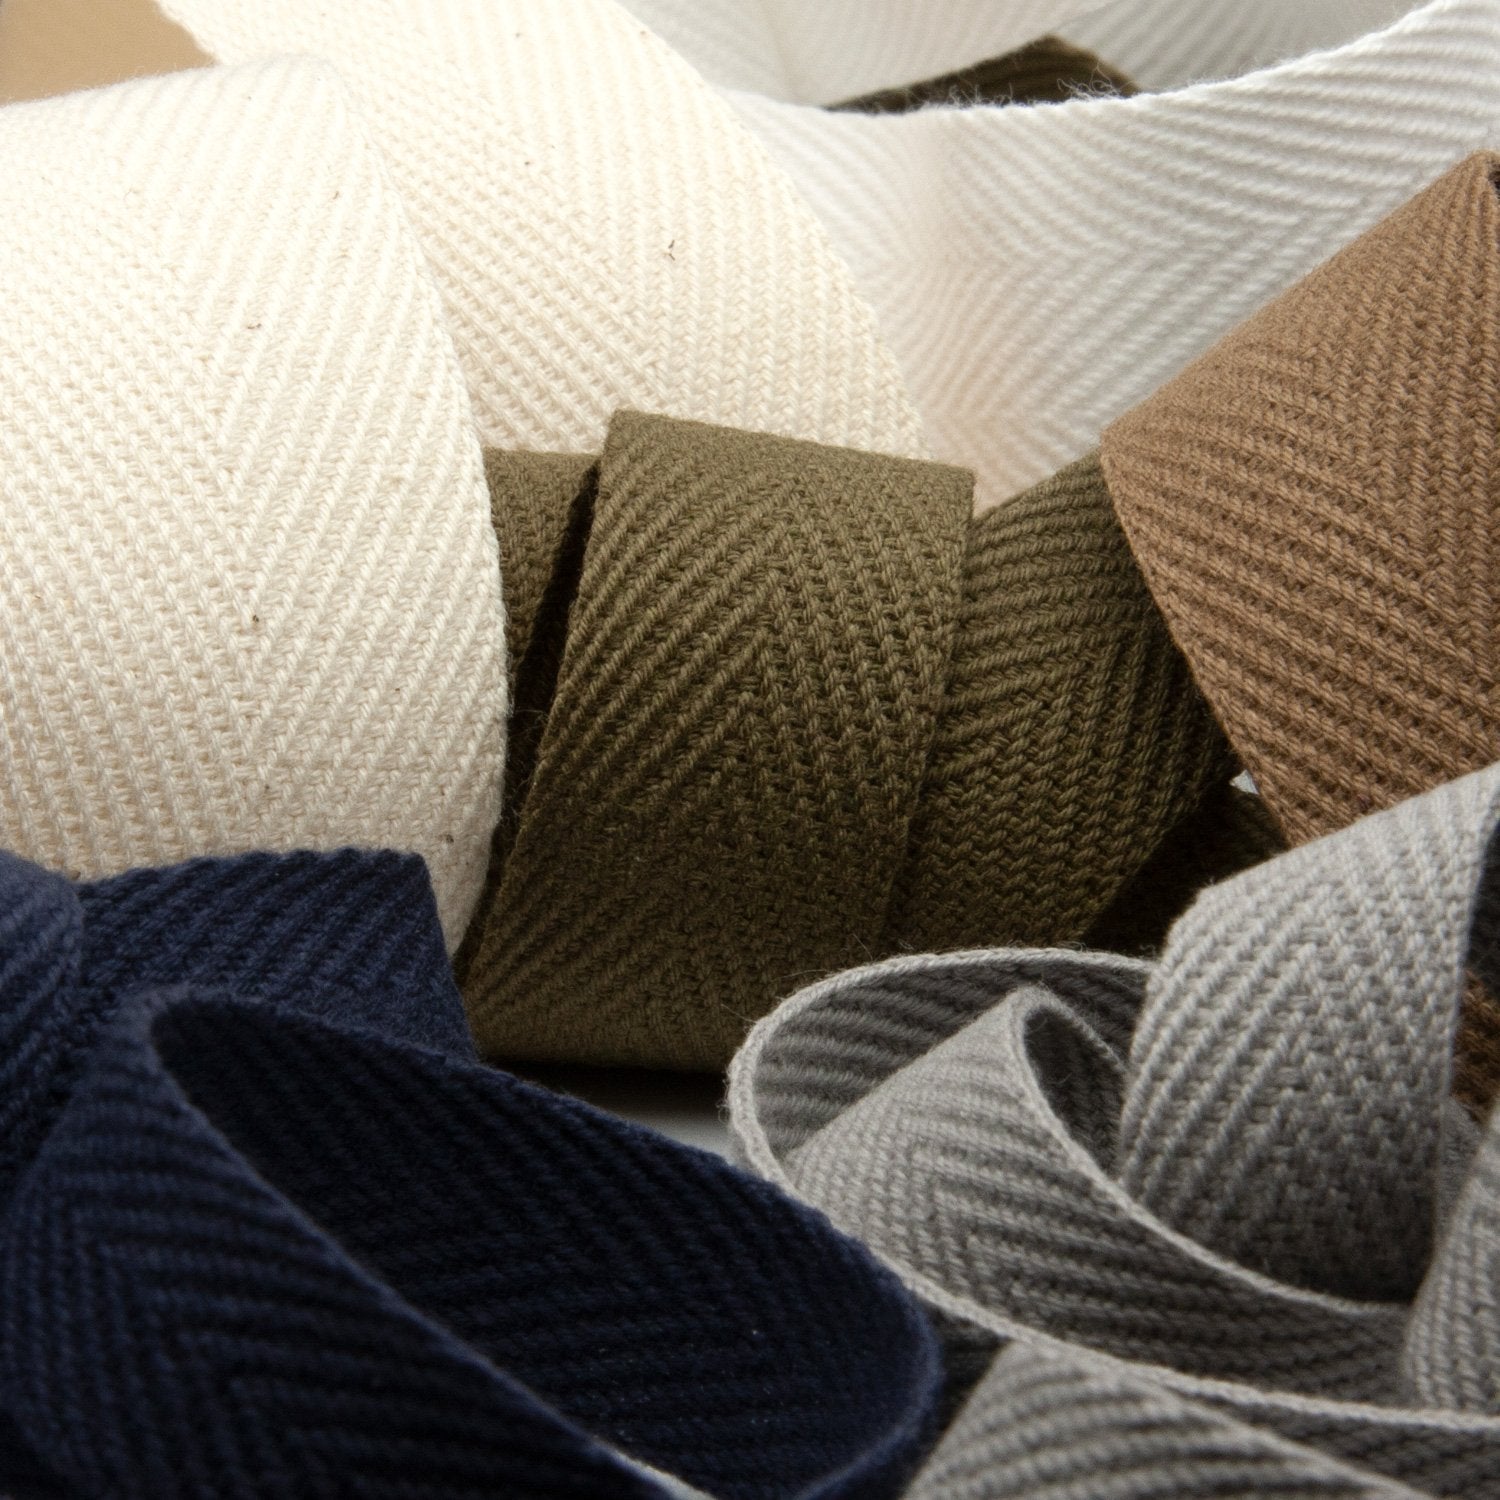 FUJIYAMA RIBBON [Wholesale] Thick Cotton Herringbone Ribbon 25mm 50 Meters Roll White